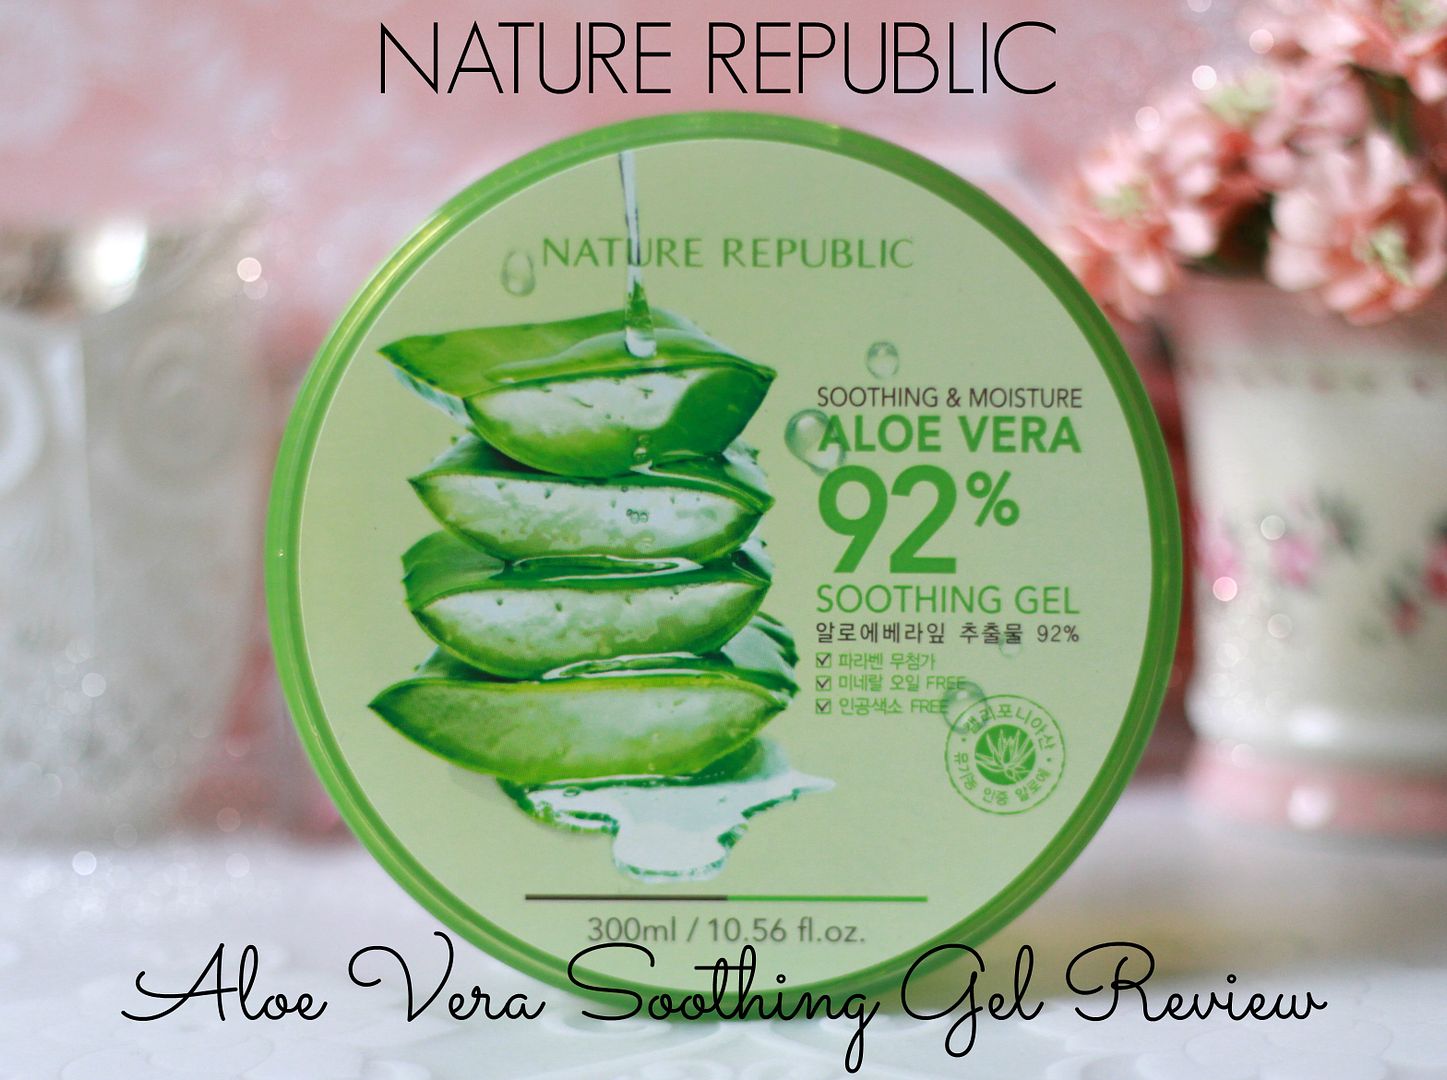 Soothing gel перевод. Aloe Vera body Gel nature Republic. Organia Aloe Vera Soothing Gel 92%. Алоэ шайба nature Republic. Nature Republic баннер.